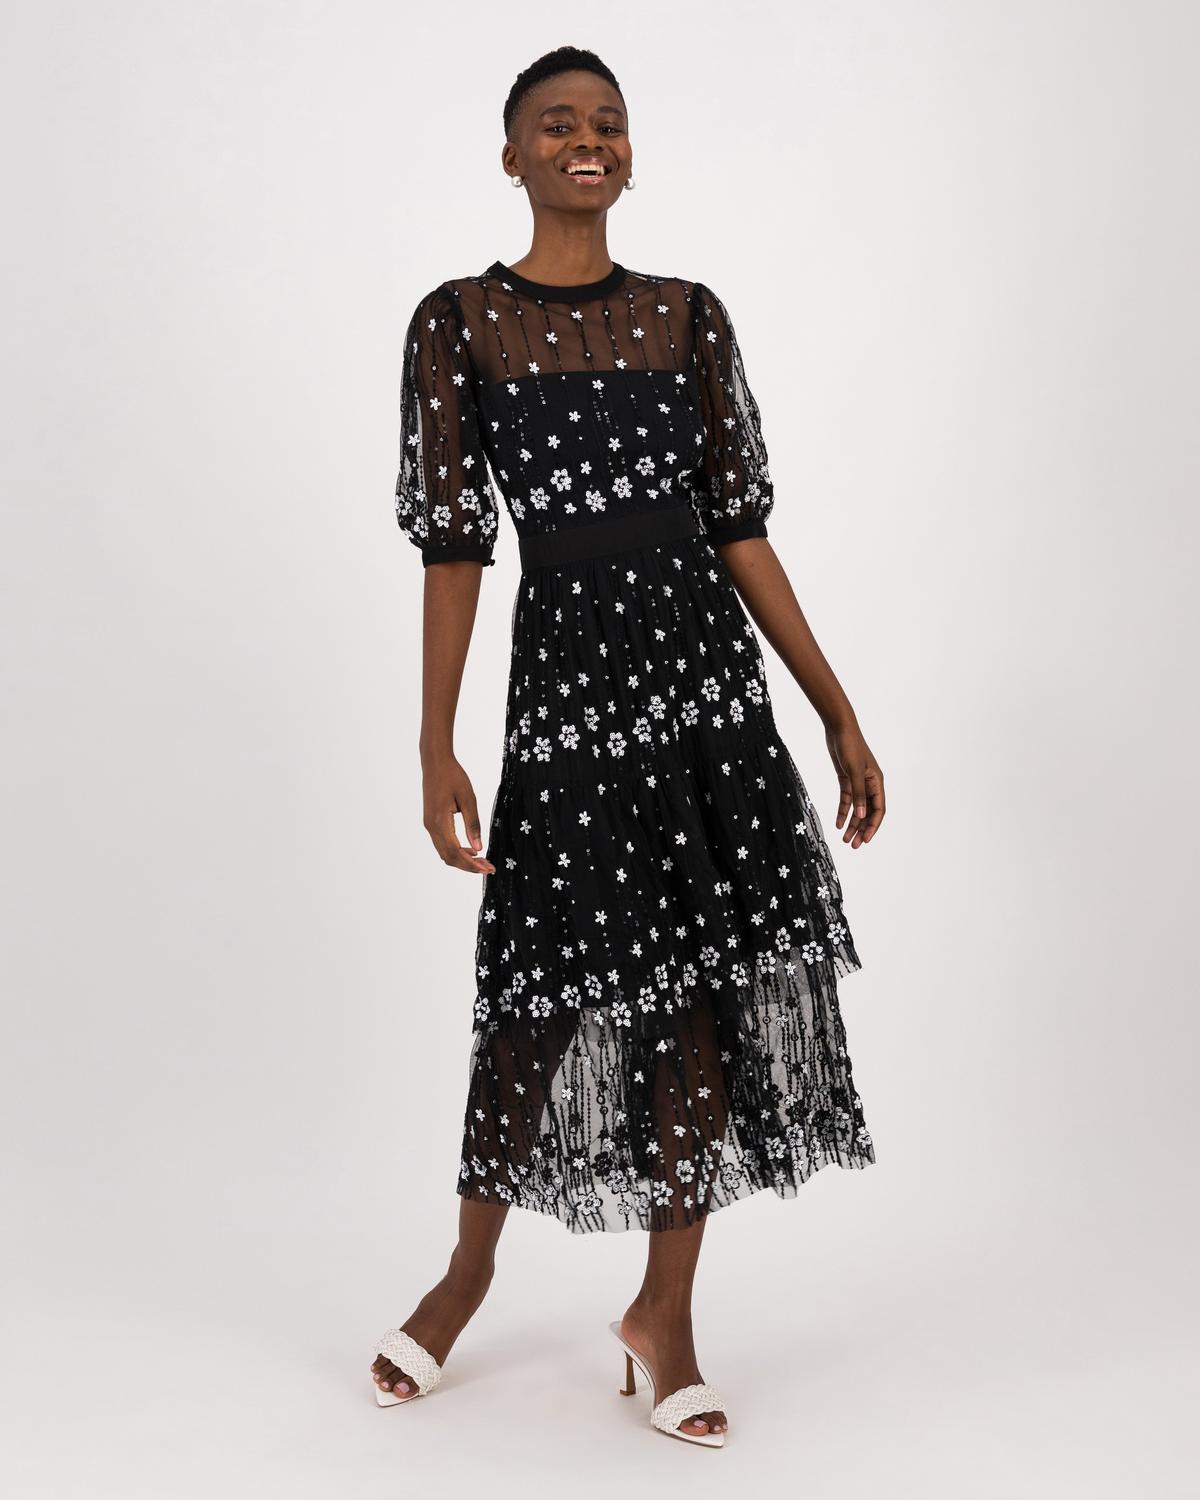 Rizzo Embellished Dress -  Black